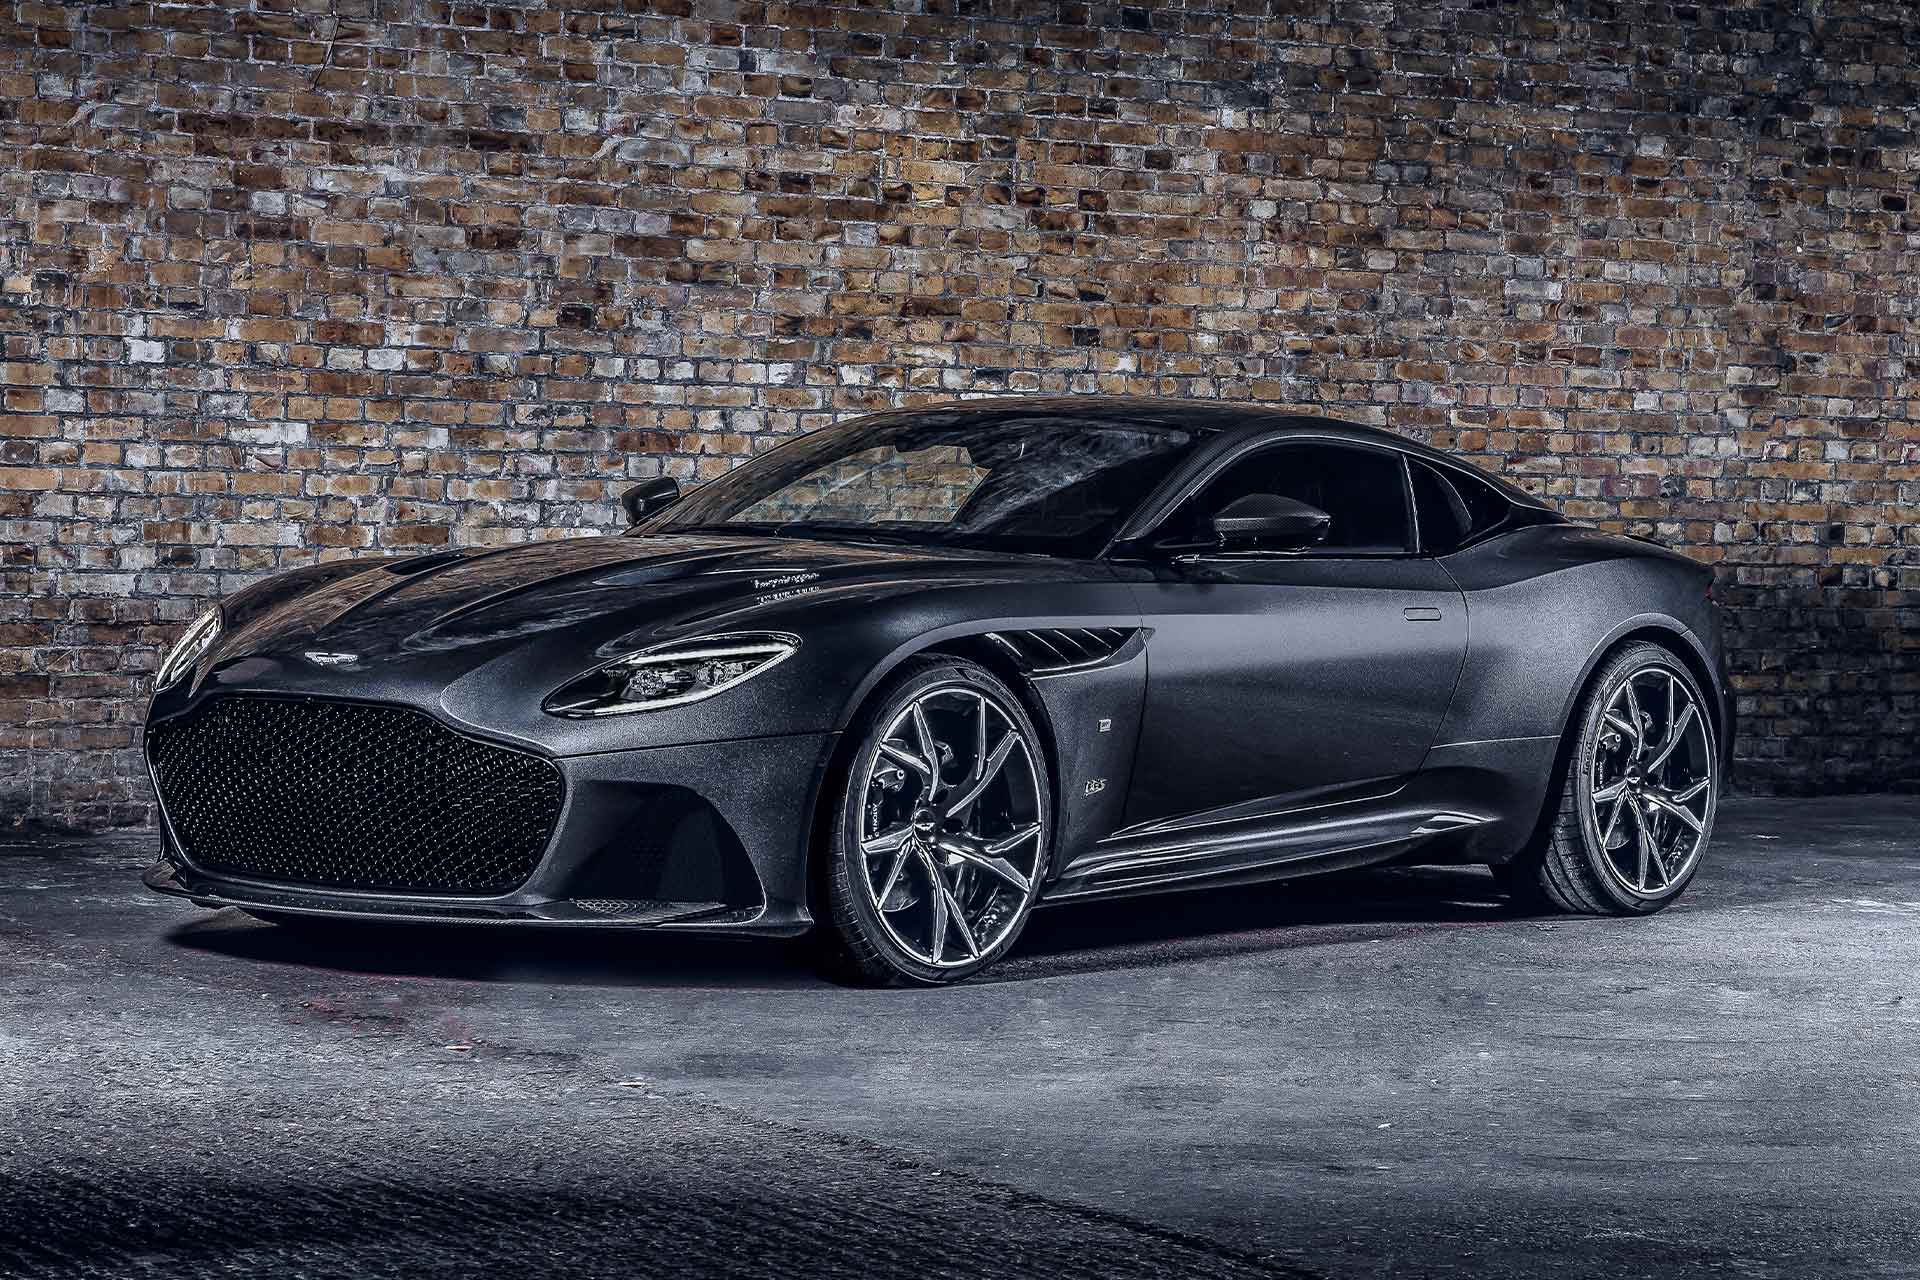 Aston Martin 007 Edition Sports Cars | Uncrate